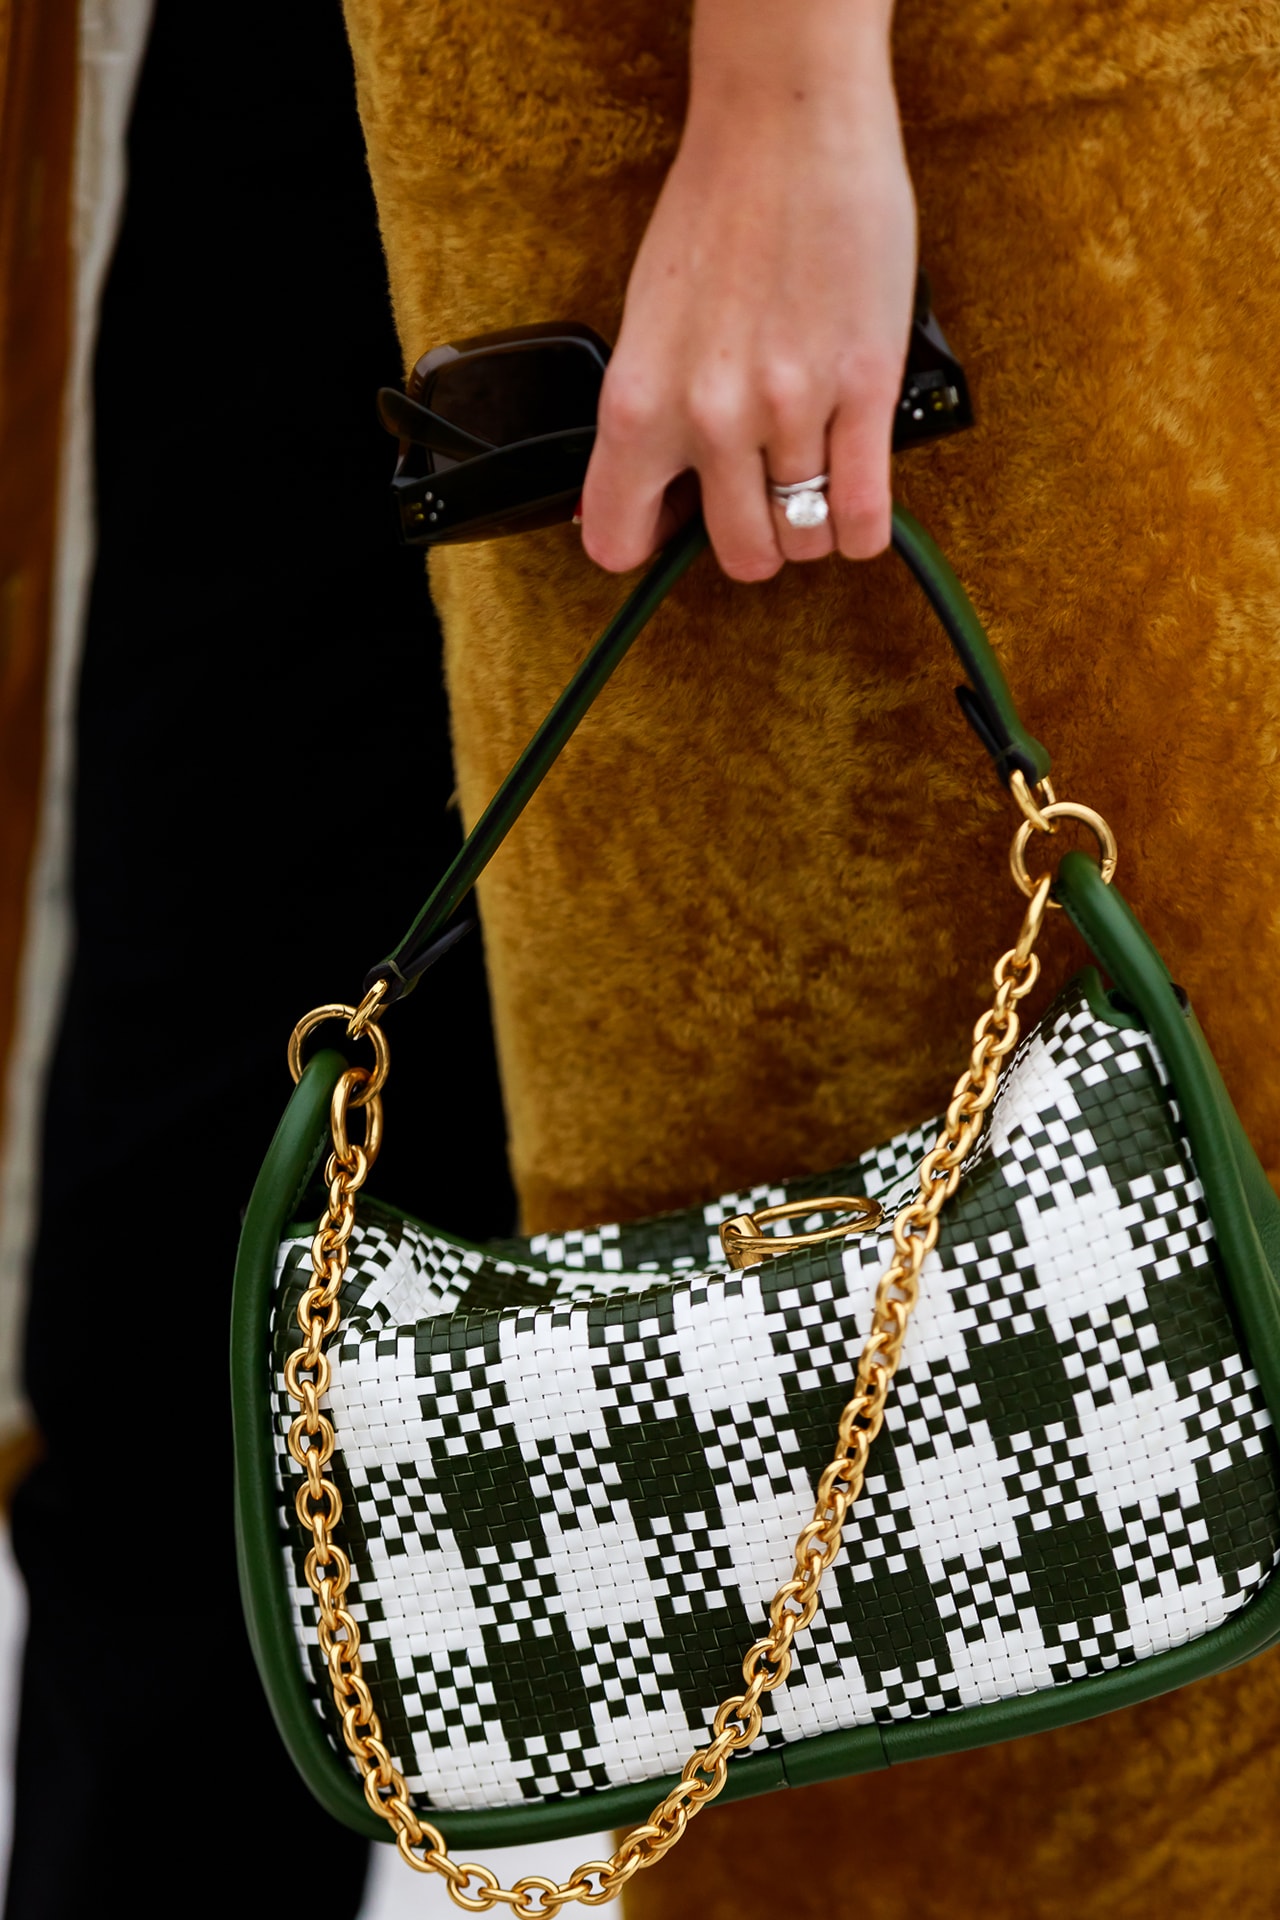 stockholm fashion week street style blogger influencer bag